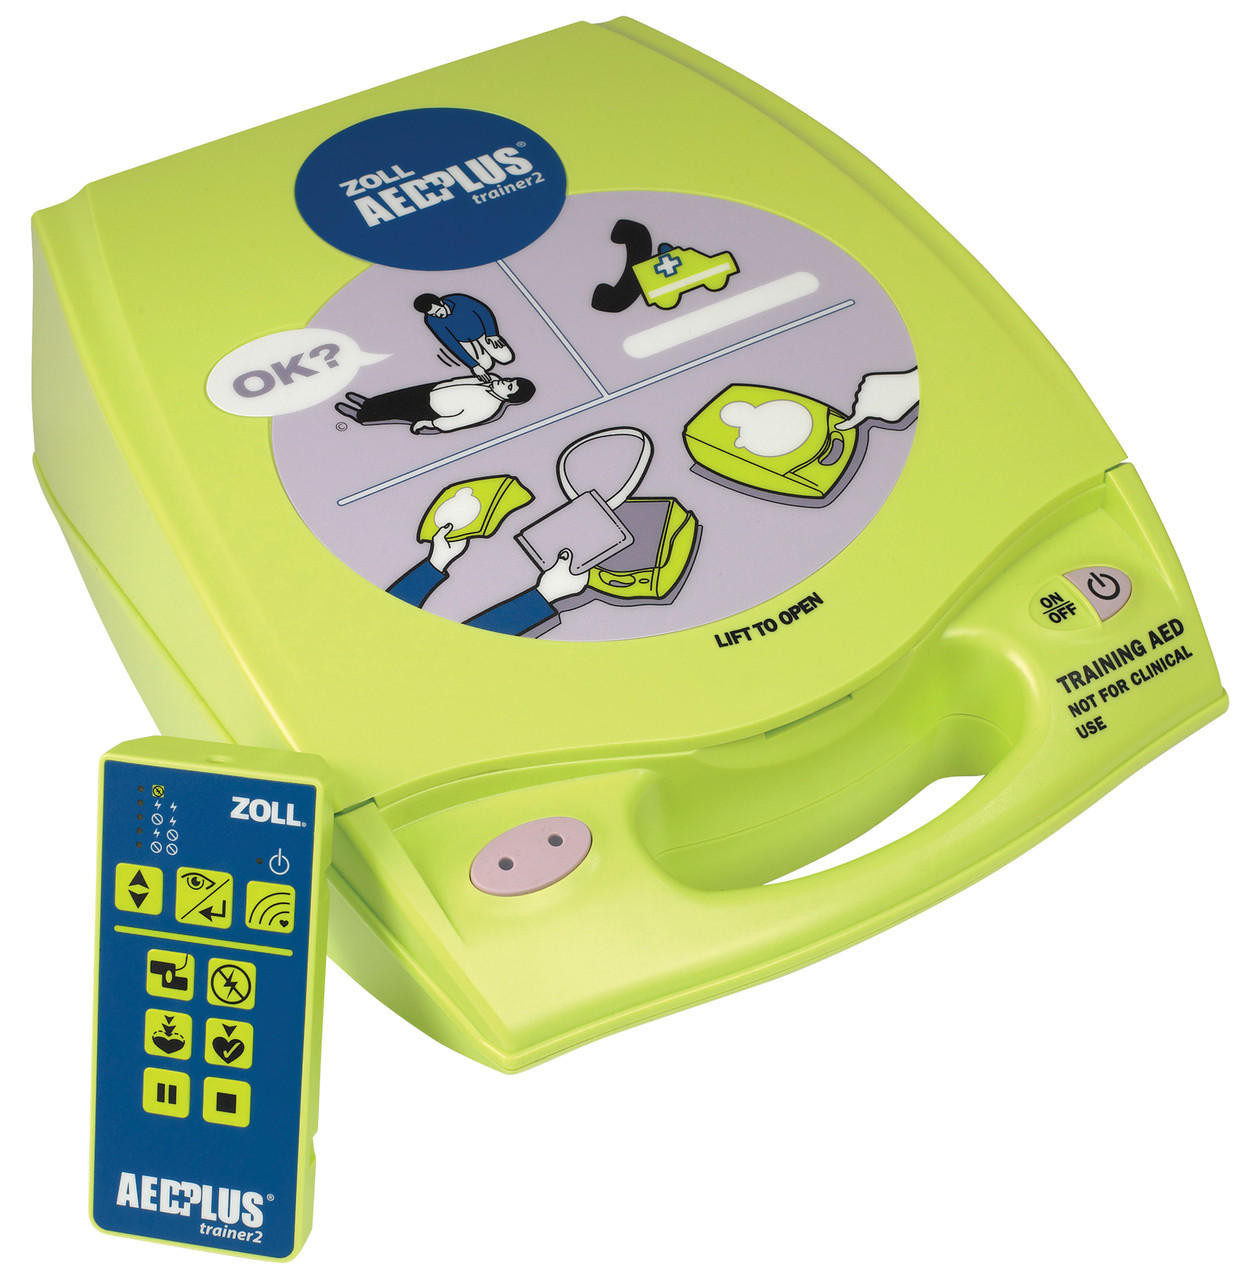 FAQ3320 Zoll Defibrillator AED Plus Training Unit   8008-0050-05